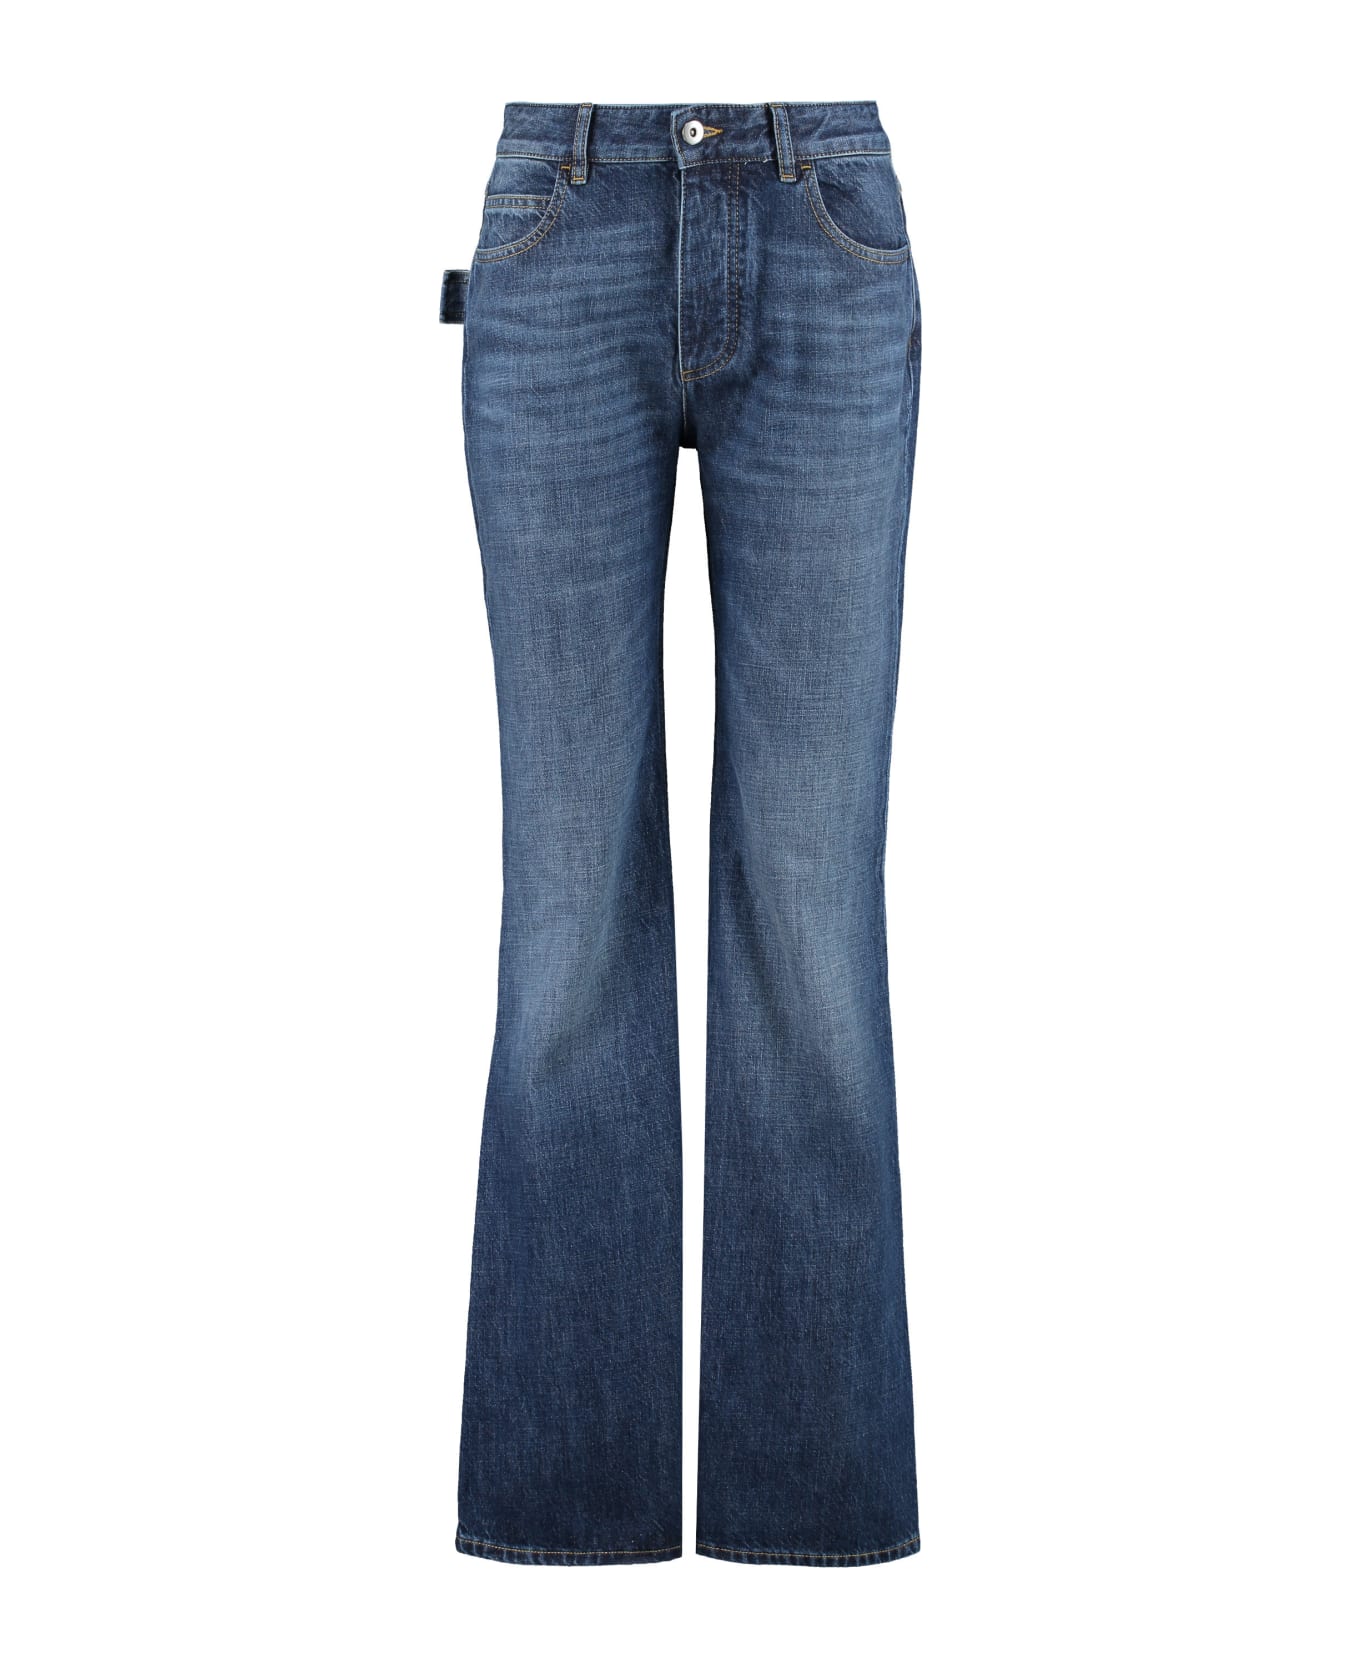 Bottega Veneta 5-pocket Jeans - Mid Blue